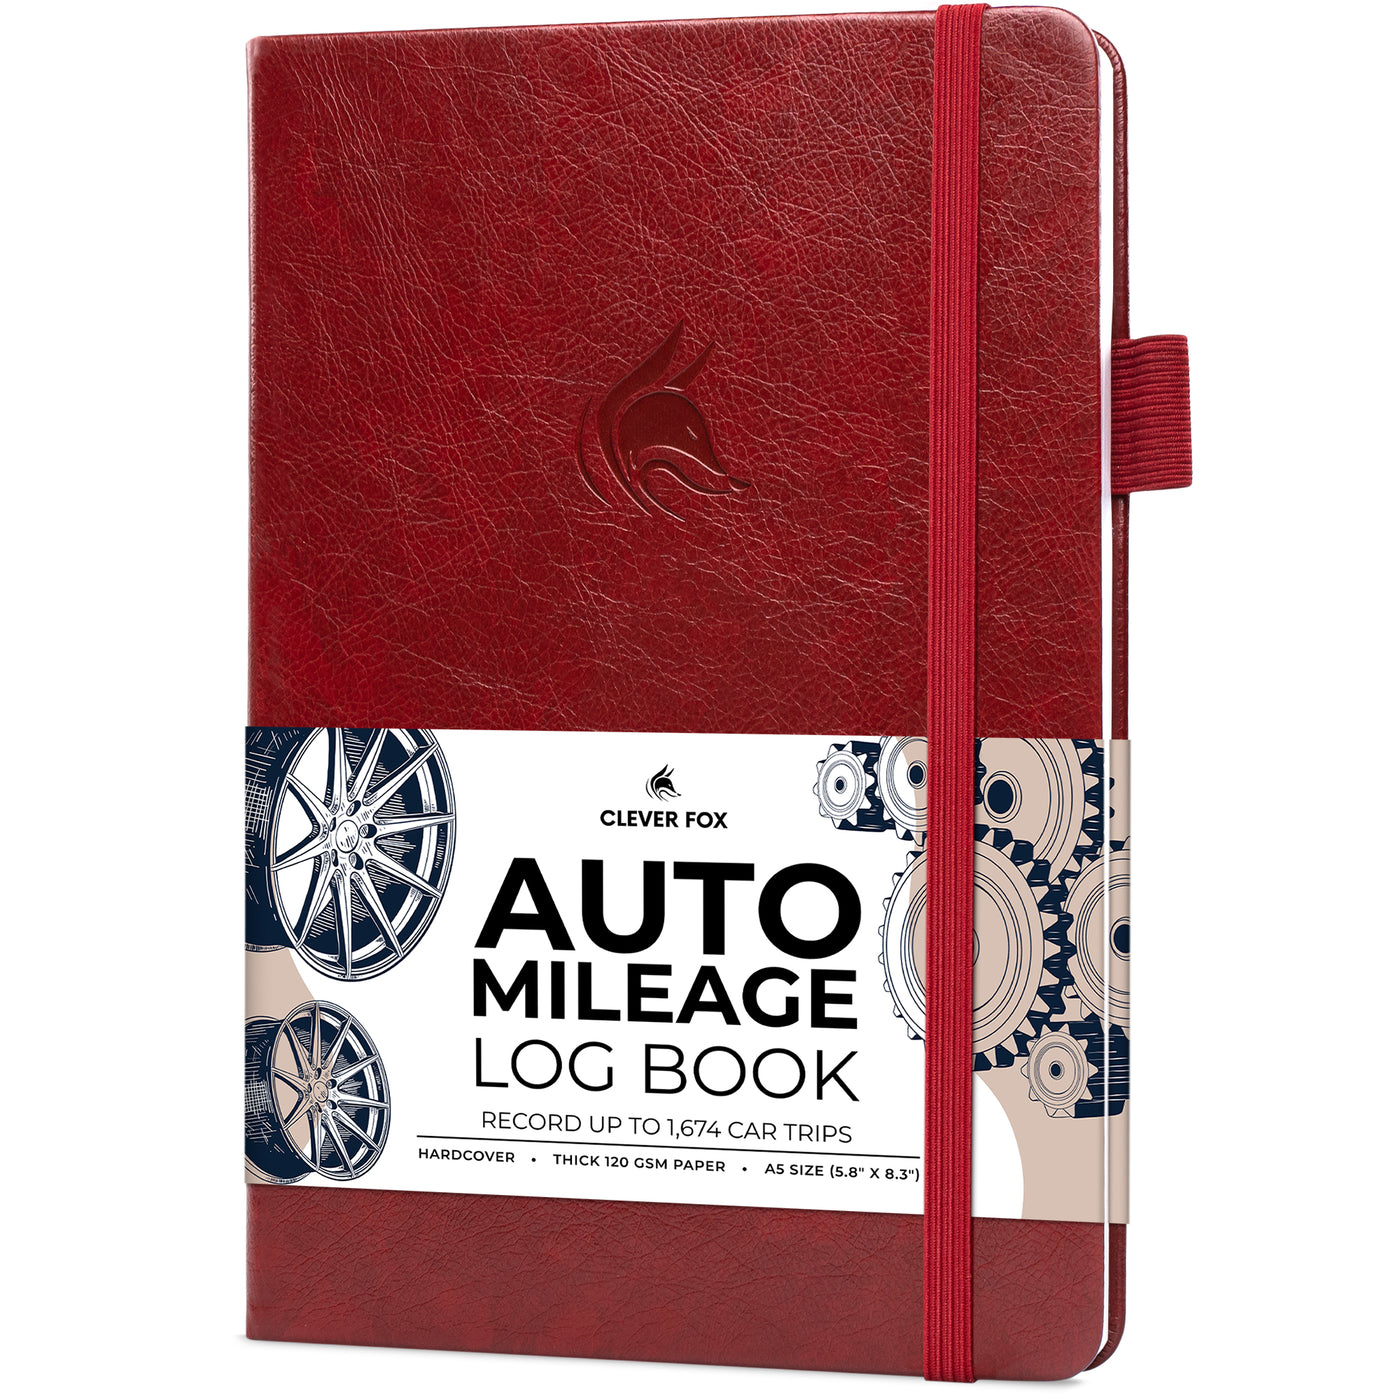 Auto Mileage Log Book